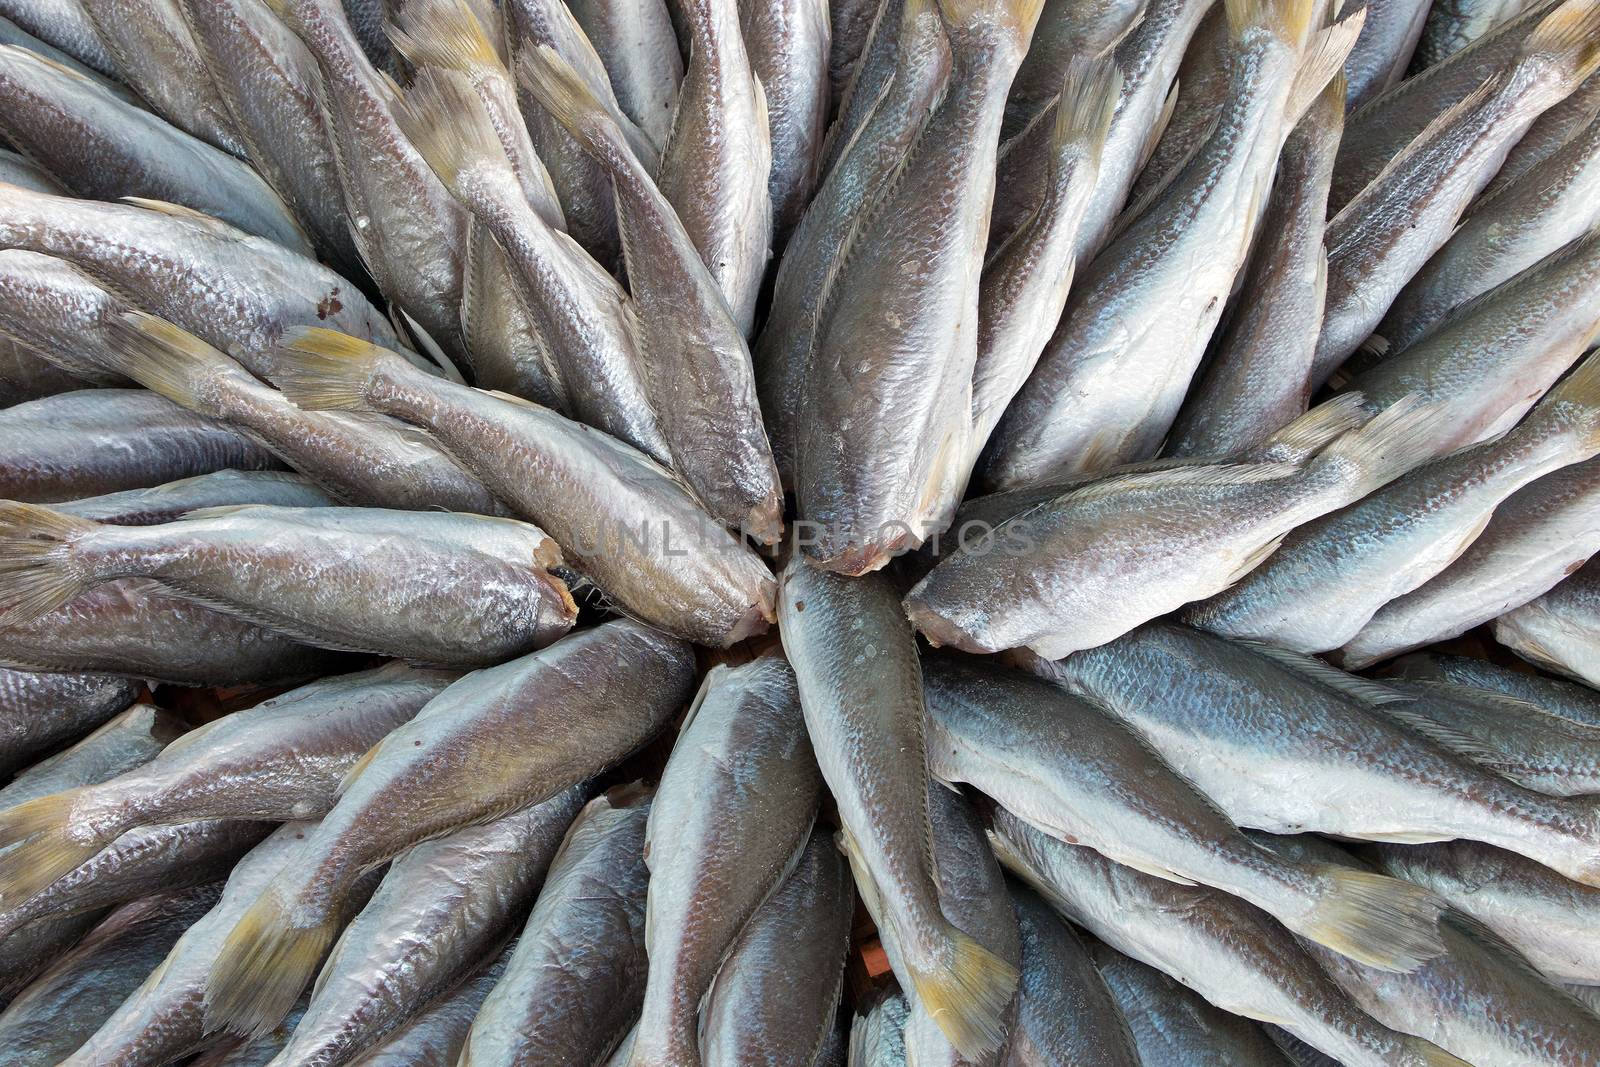 Dried fish at Fish Market in Chonburi, Thailand